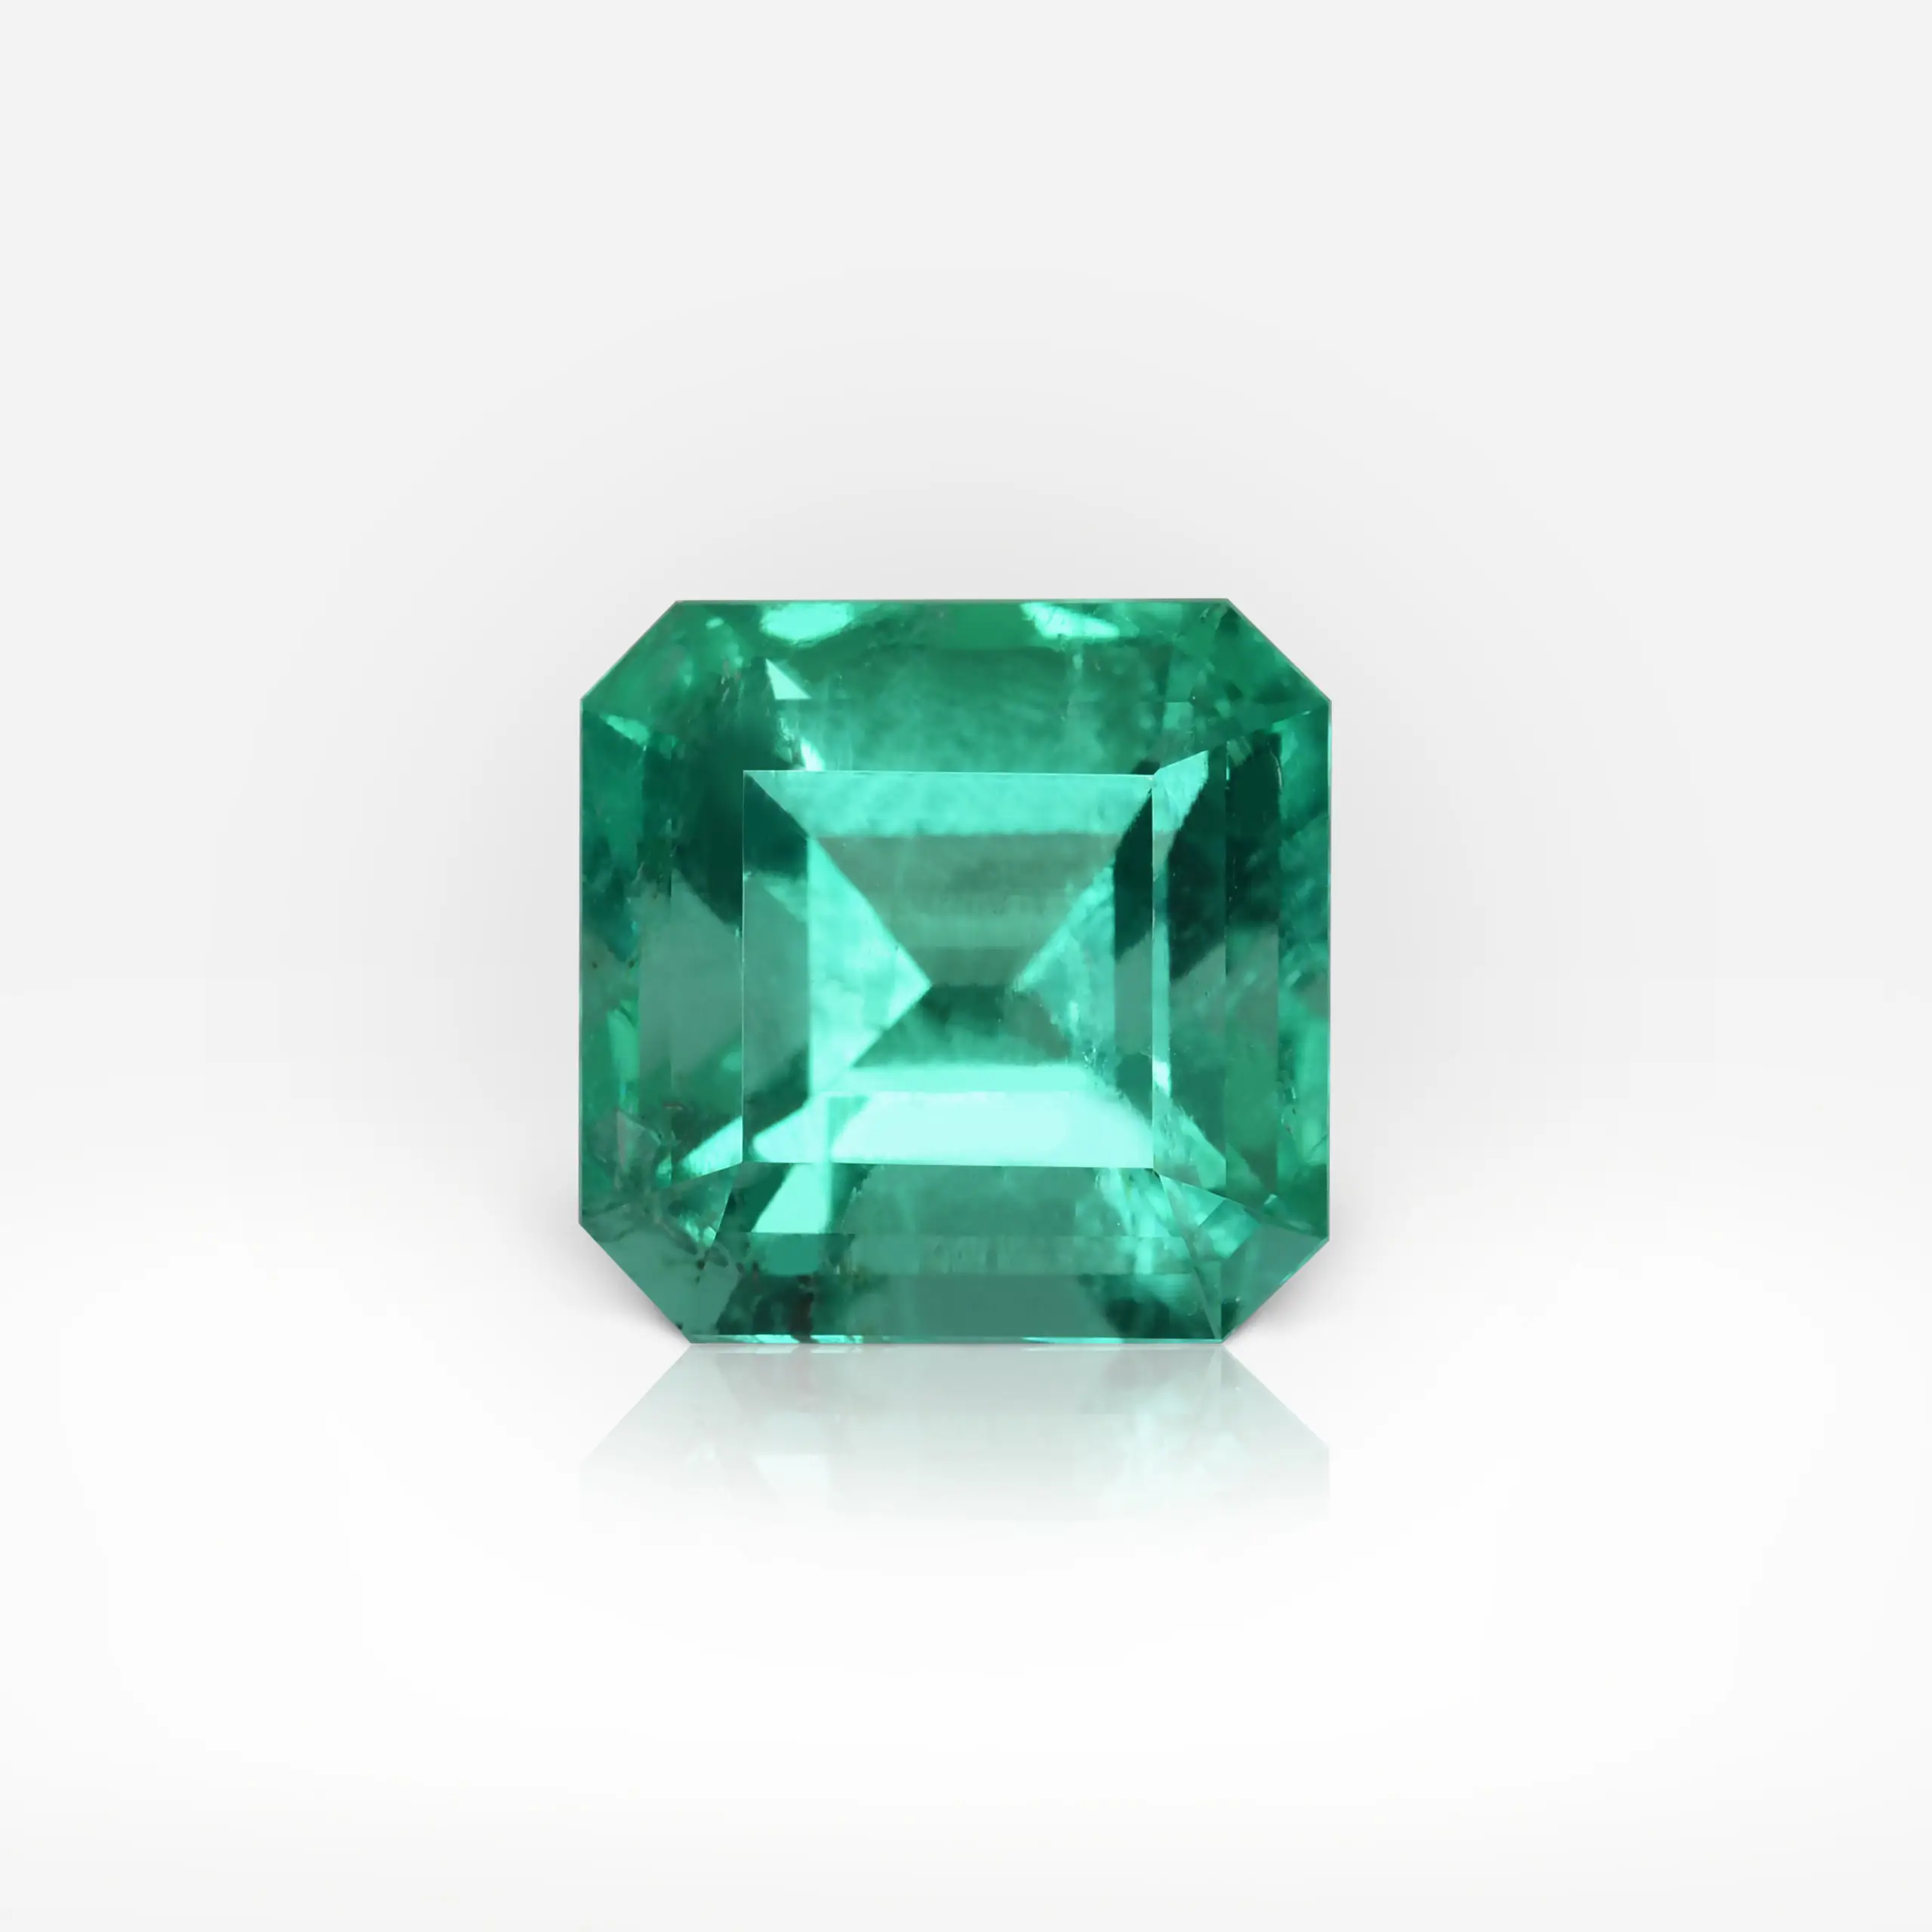 4.61 carat Octagonal Shape Intense Green Colombian Emerald CGL - picture 1